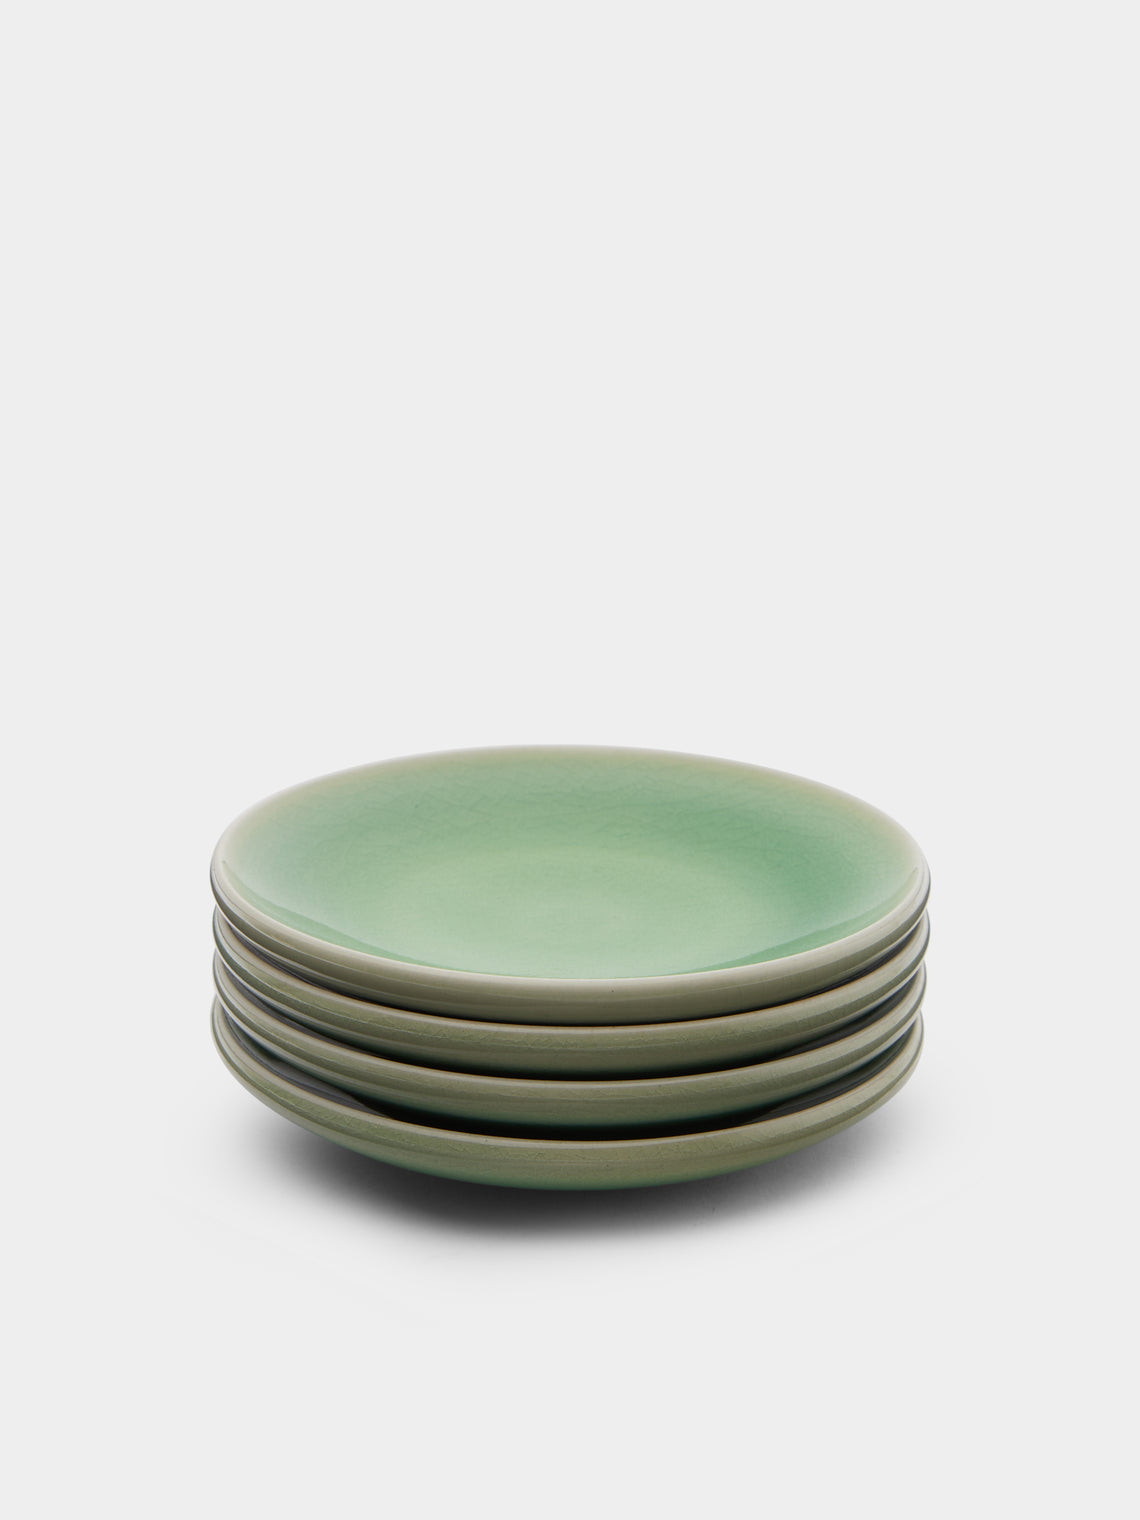 Jinho Choi - Celadon Small Plates (Set of 4) -  - ABASK